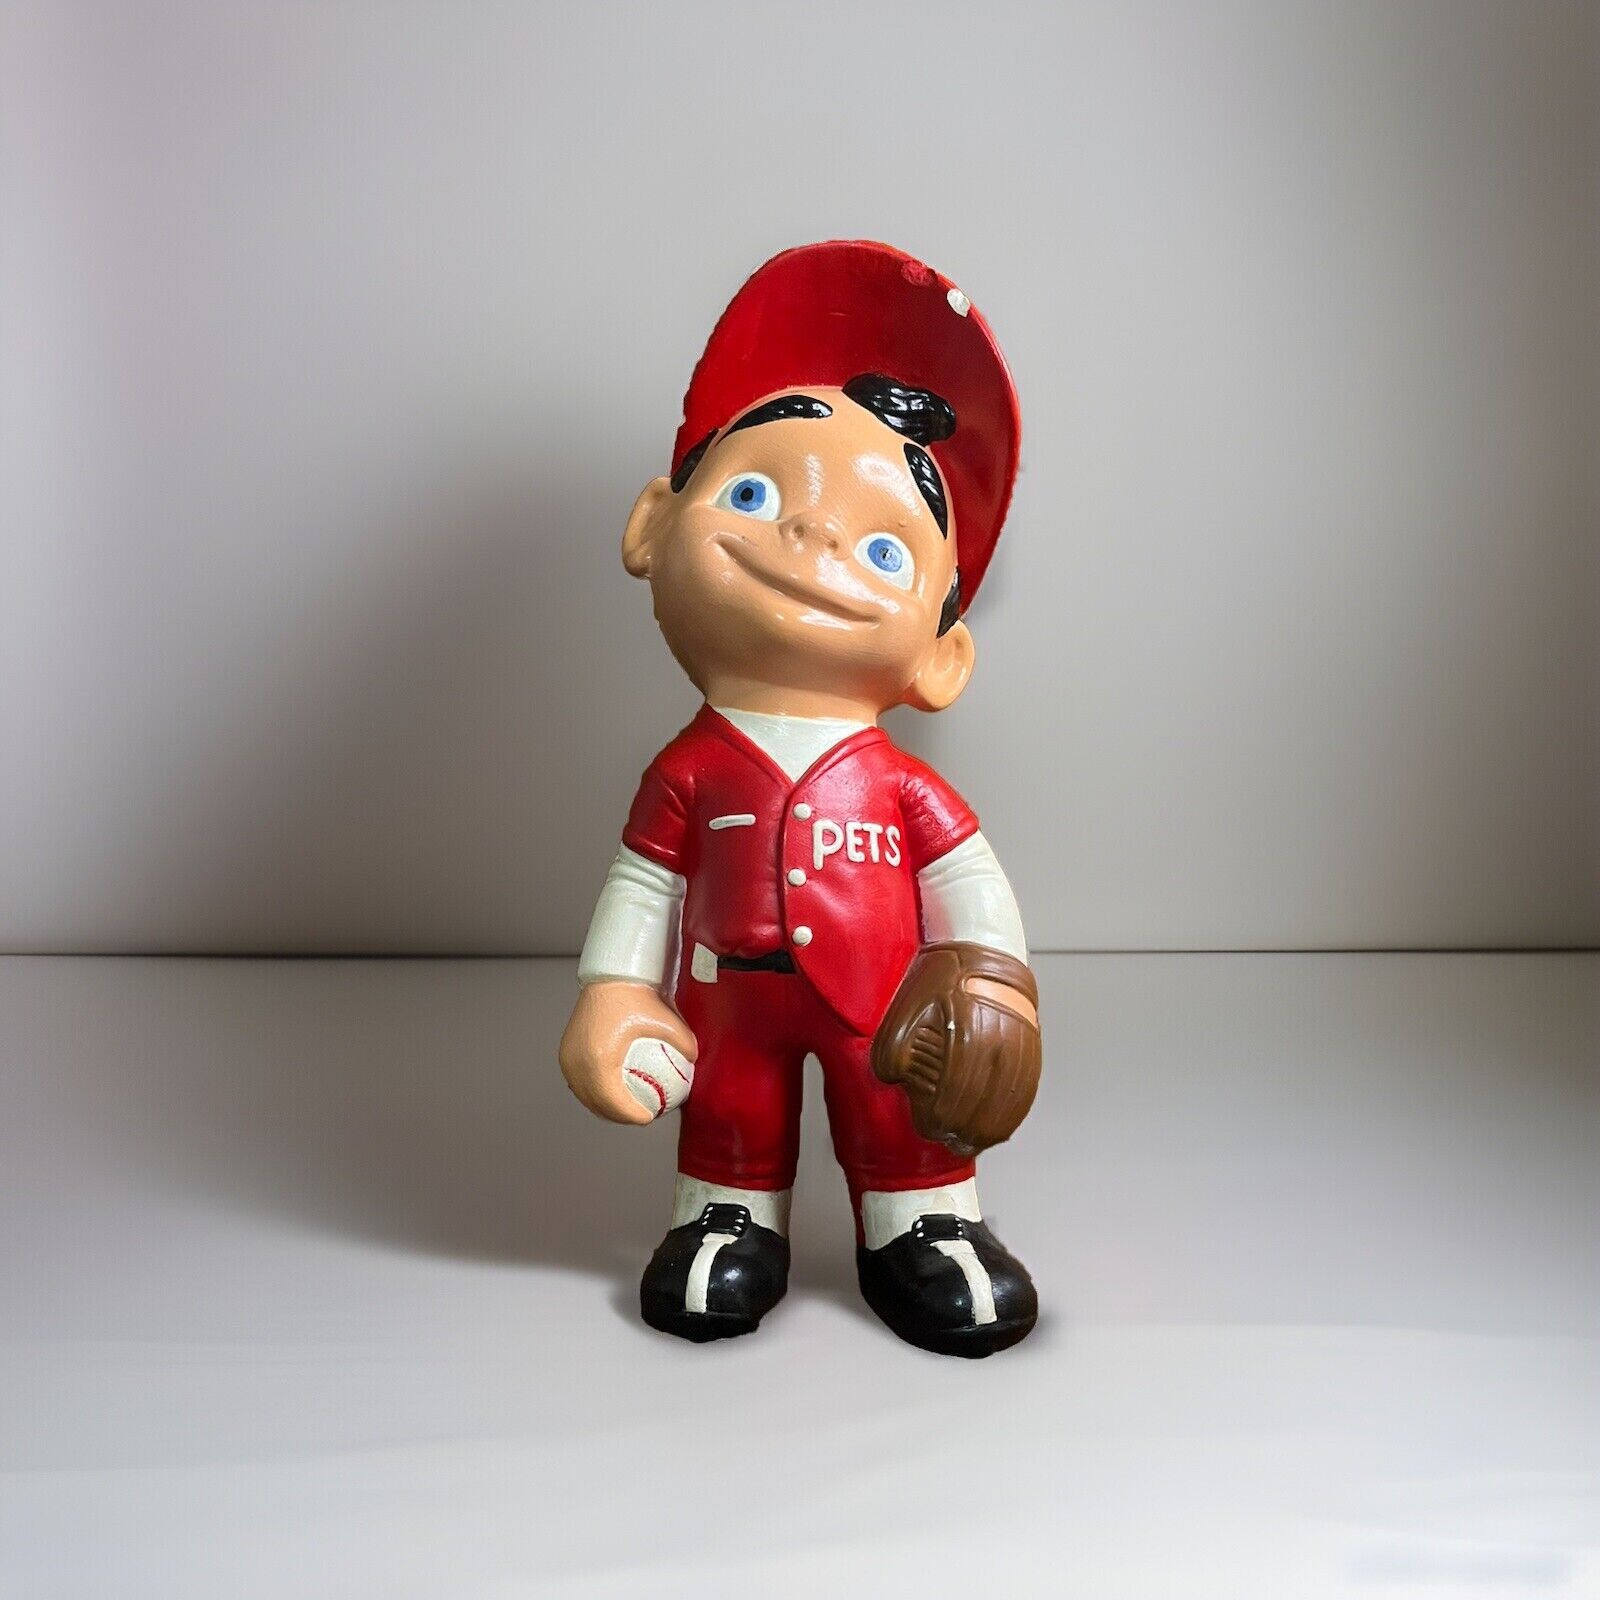 VTG 70s Baseball Player Smiley Boy Ceramic Atlantic Mold Figurine Pets Red CHIPS